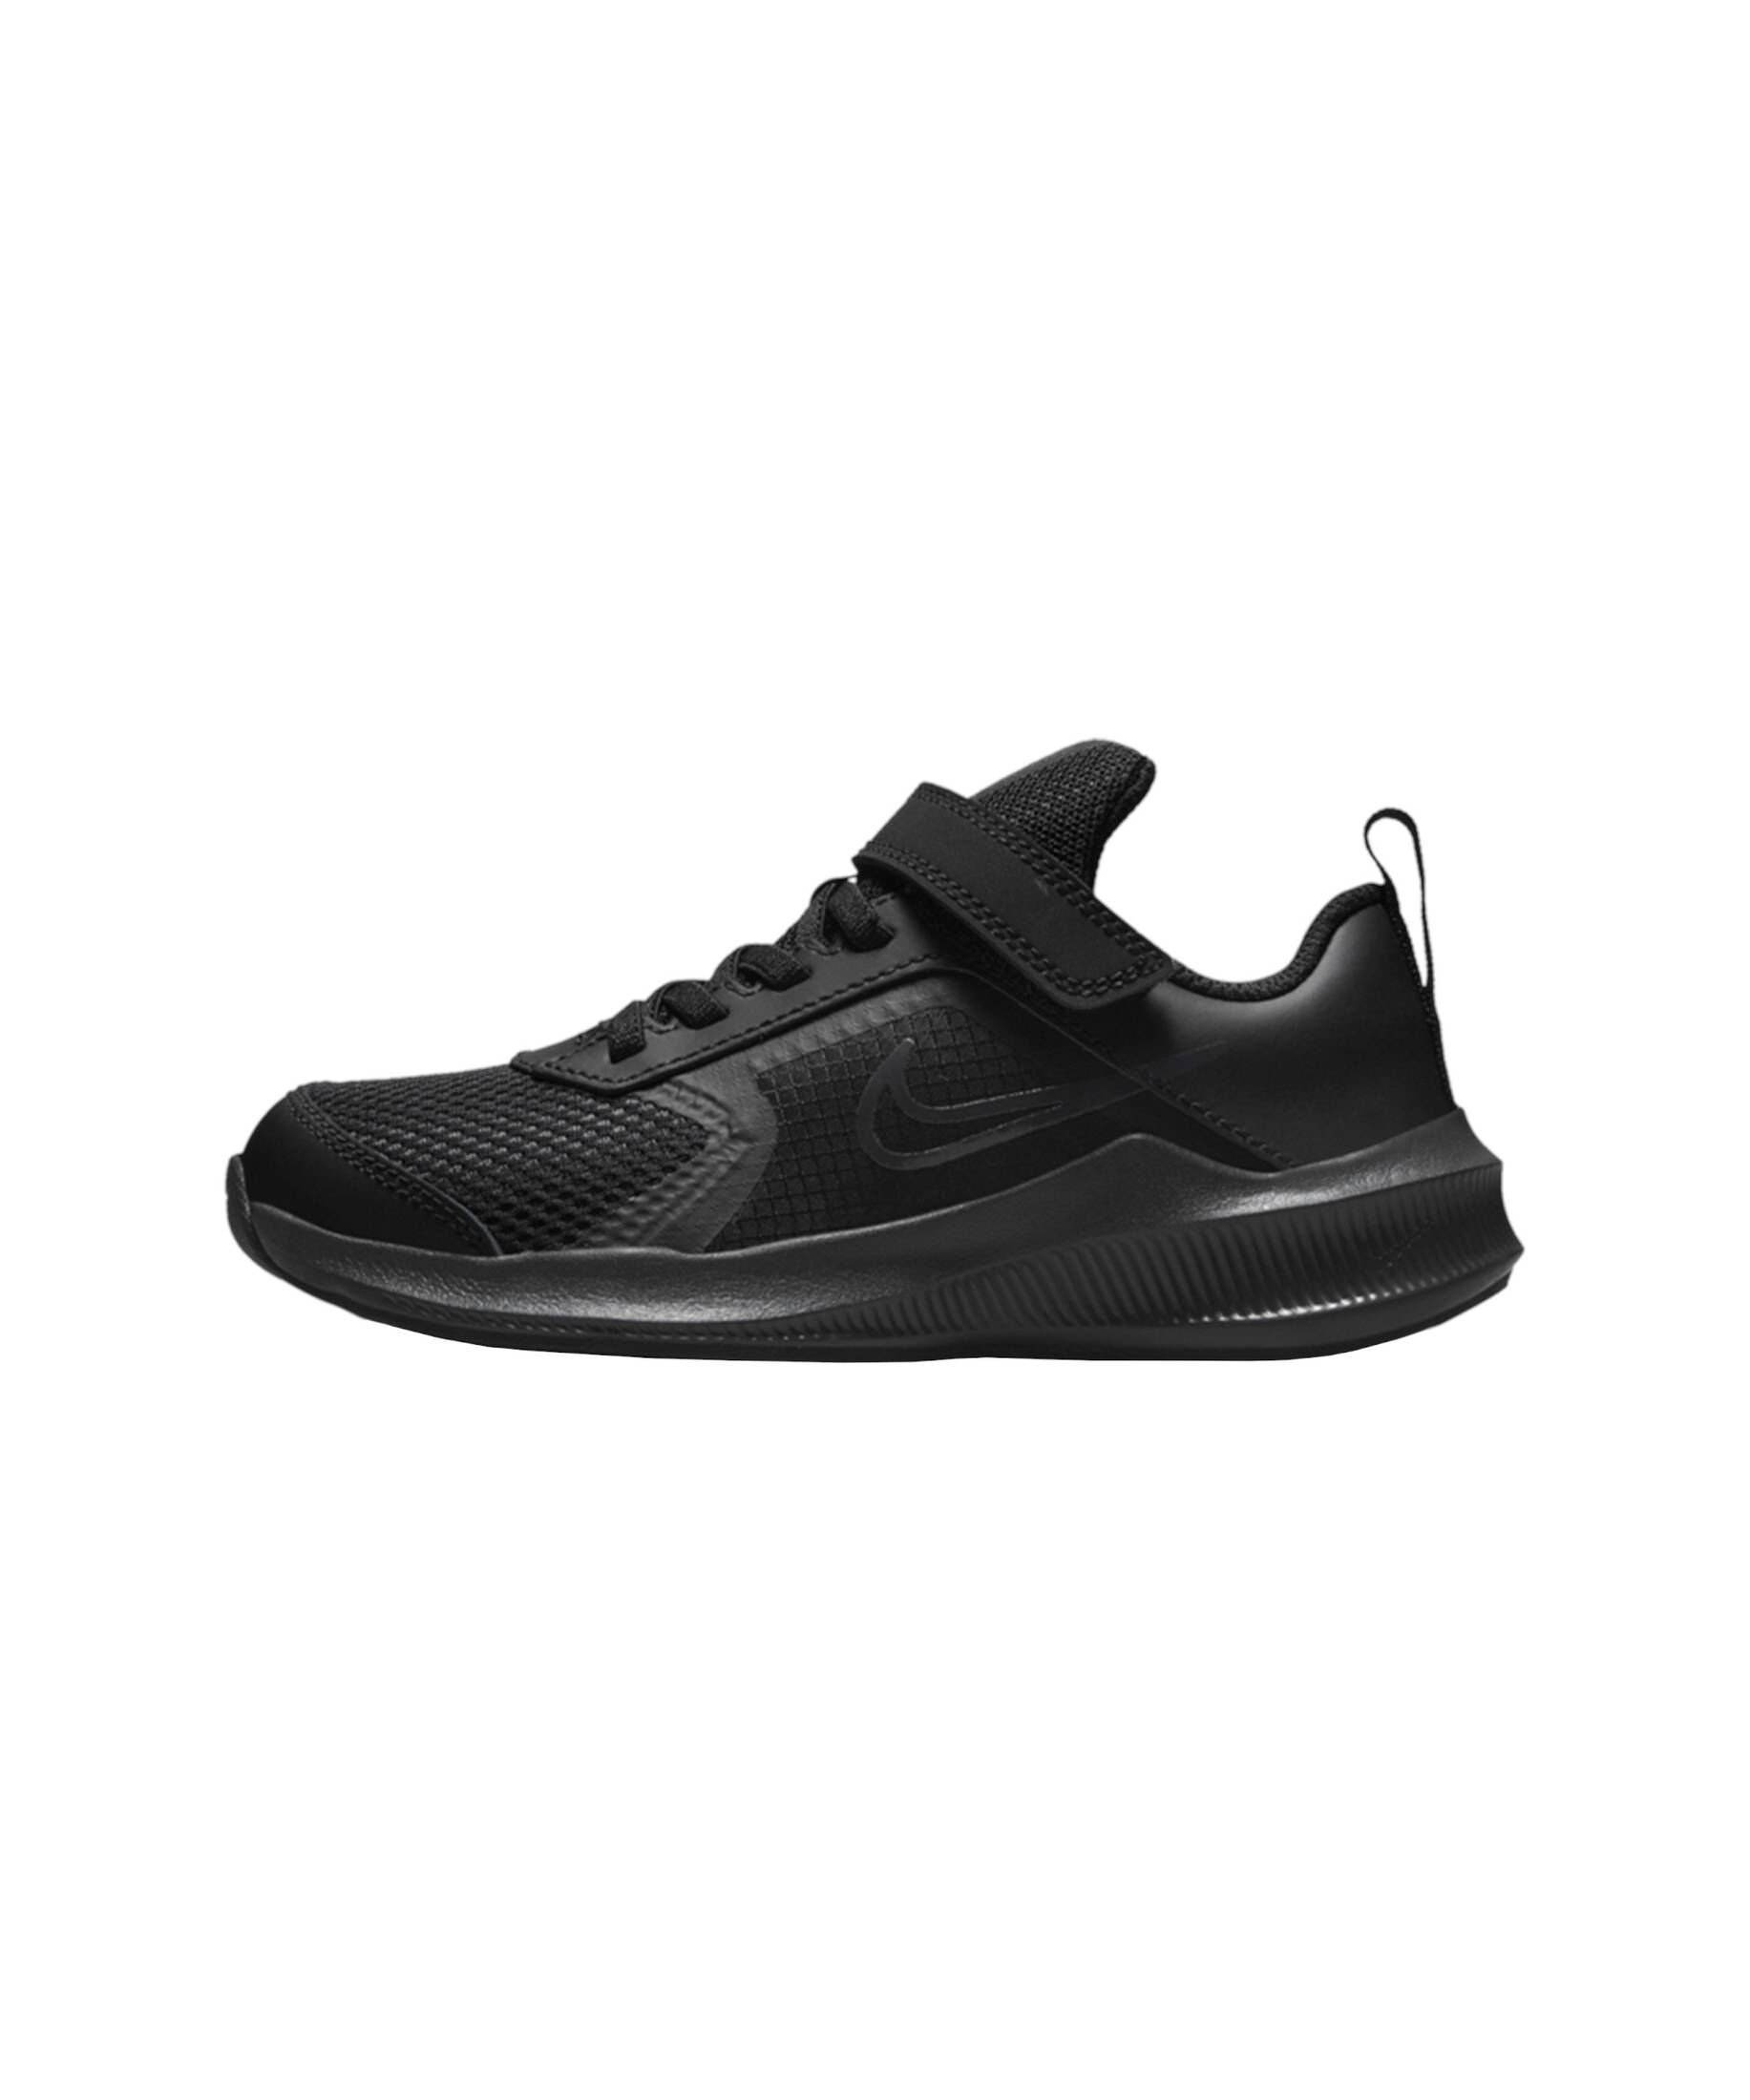 maart afbetalen nek Nike Kinder Lifestyle - Schuhe Kinder - Sneakers Downshifter 11 Kids (PSV)  kaufen | engelhorn